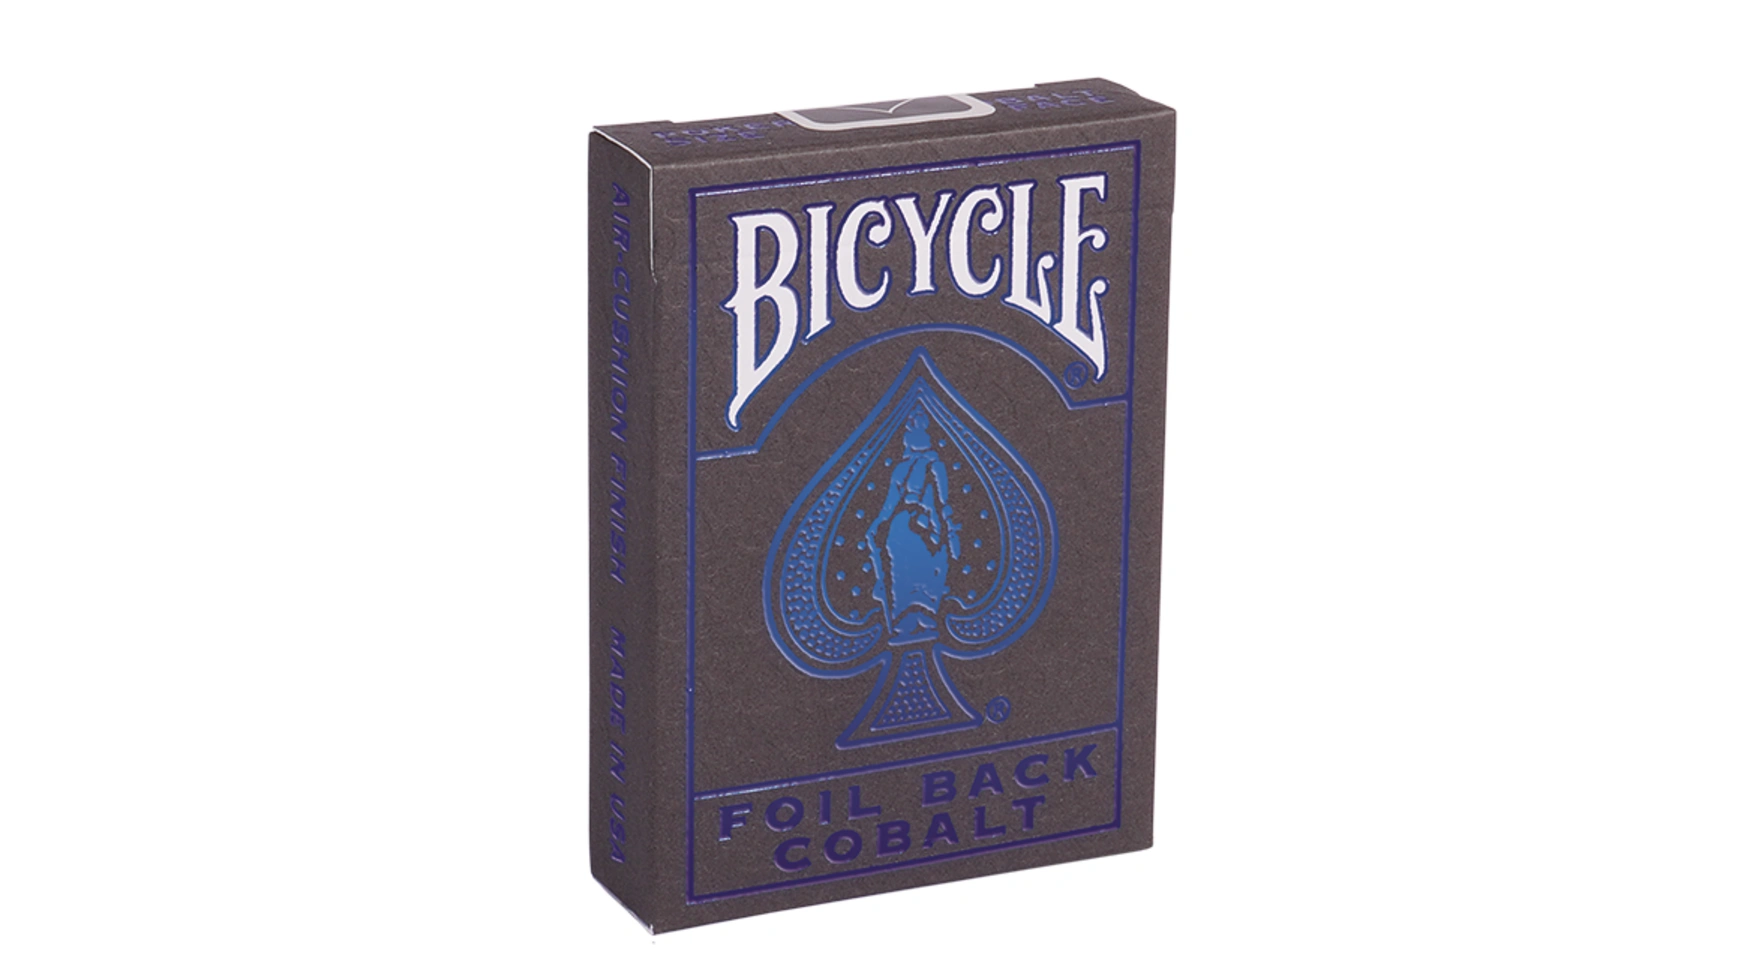 Bicycle игральные карты Metalluxe Blue